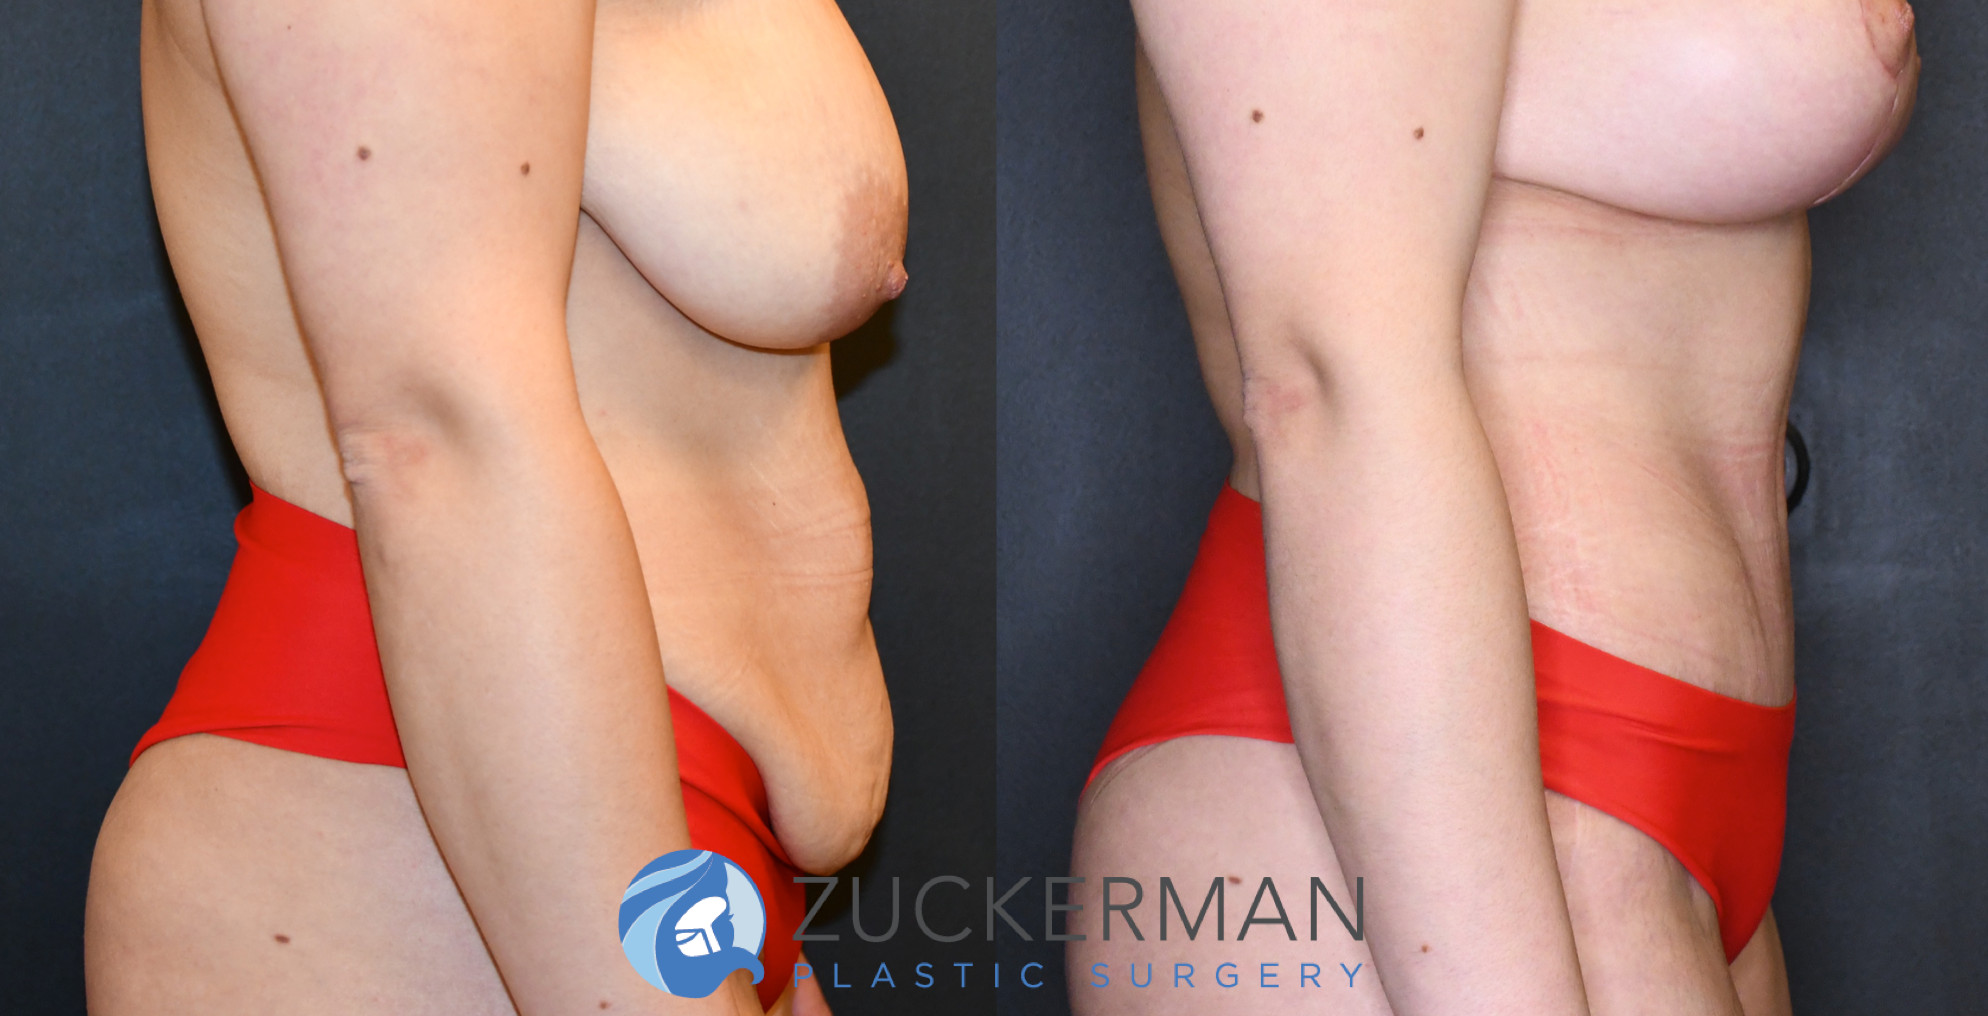 tummy tuck, abdominoplasty, before and after, liposuction, joshua zuckerman, right profile, 19